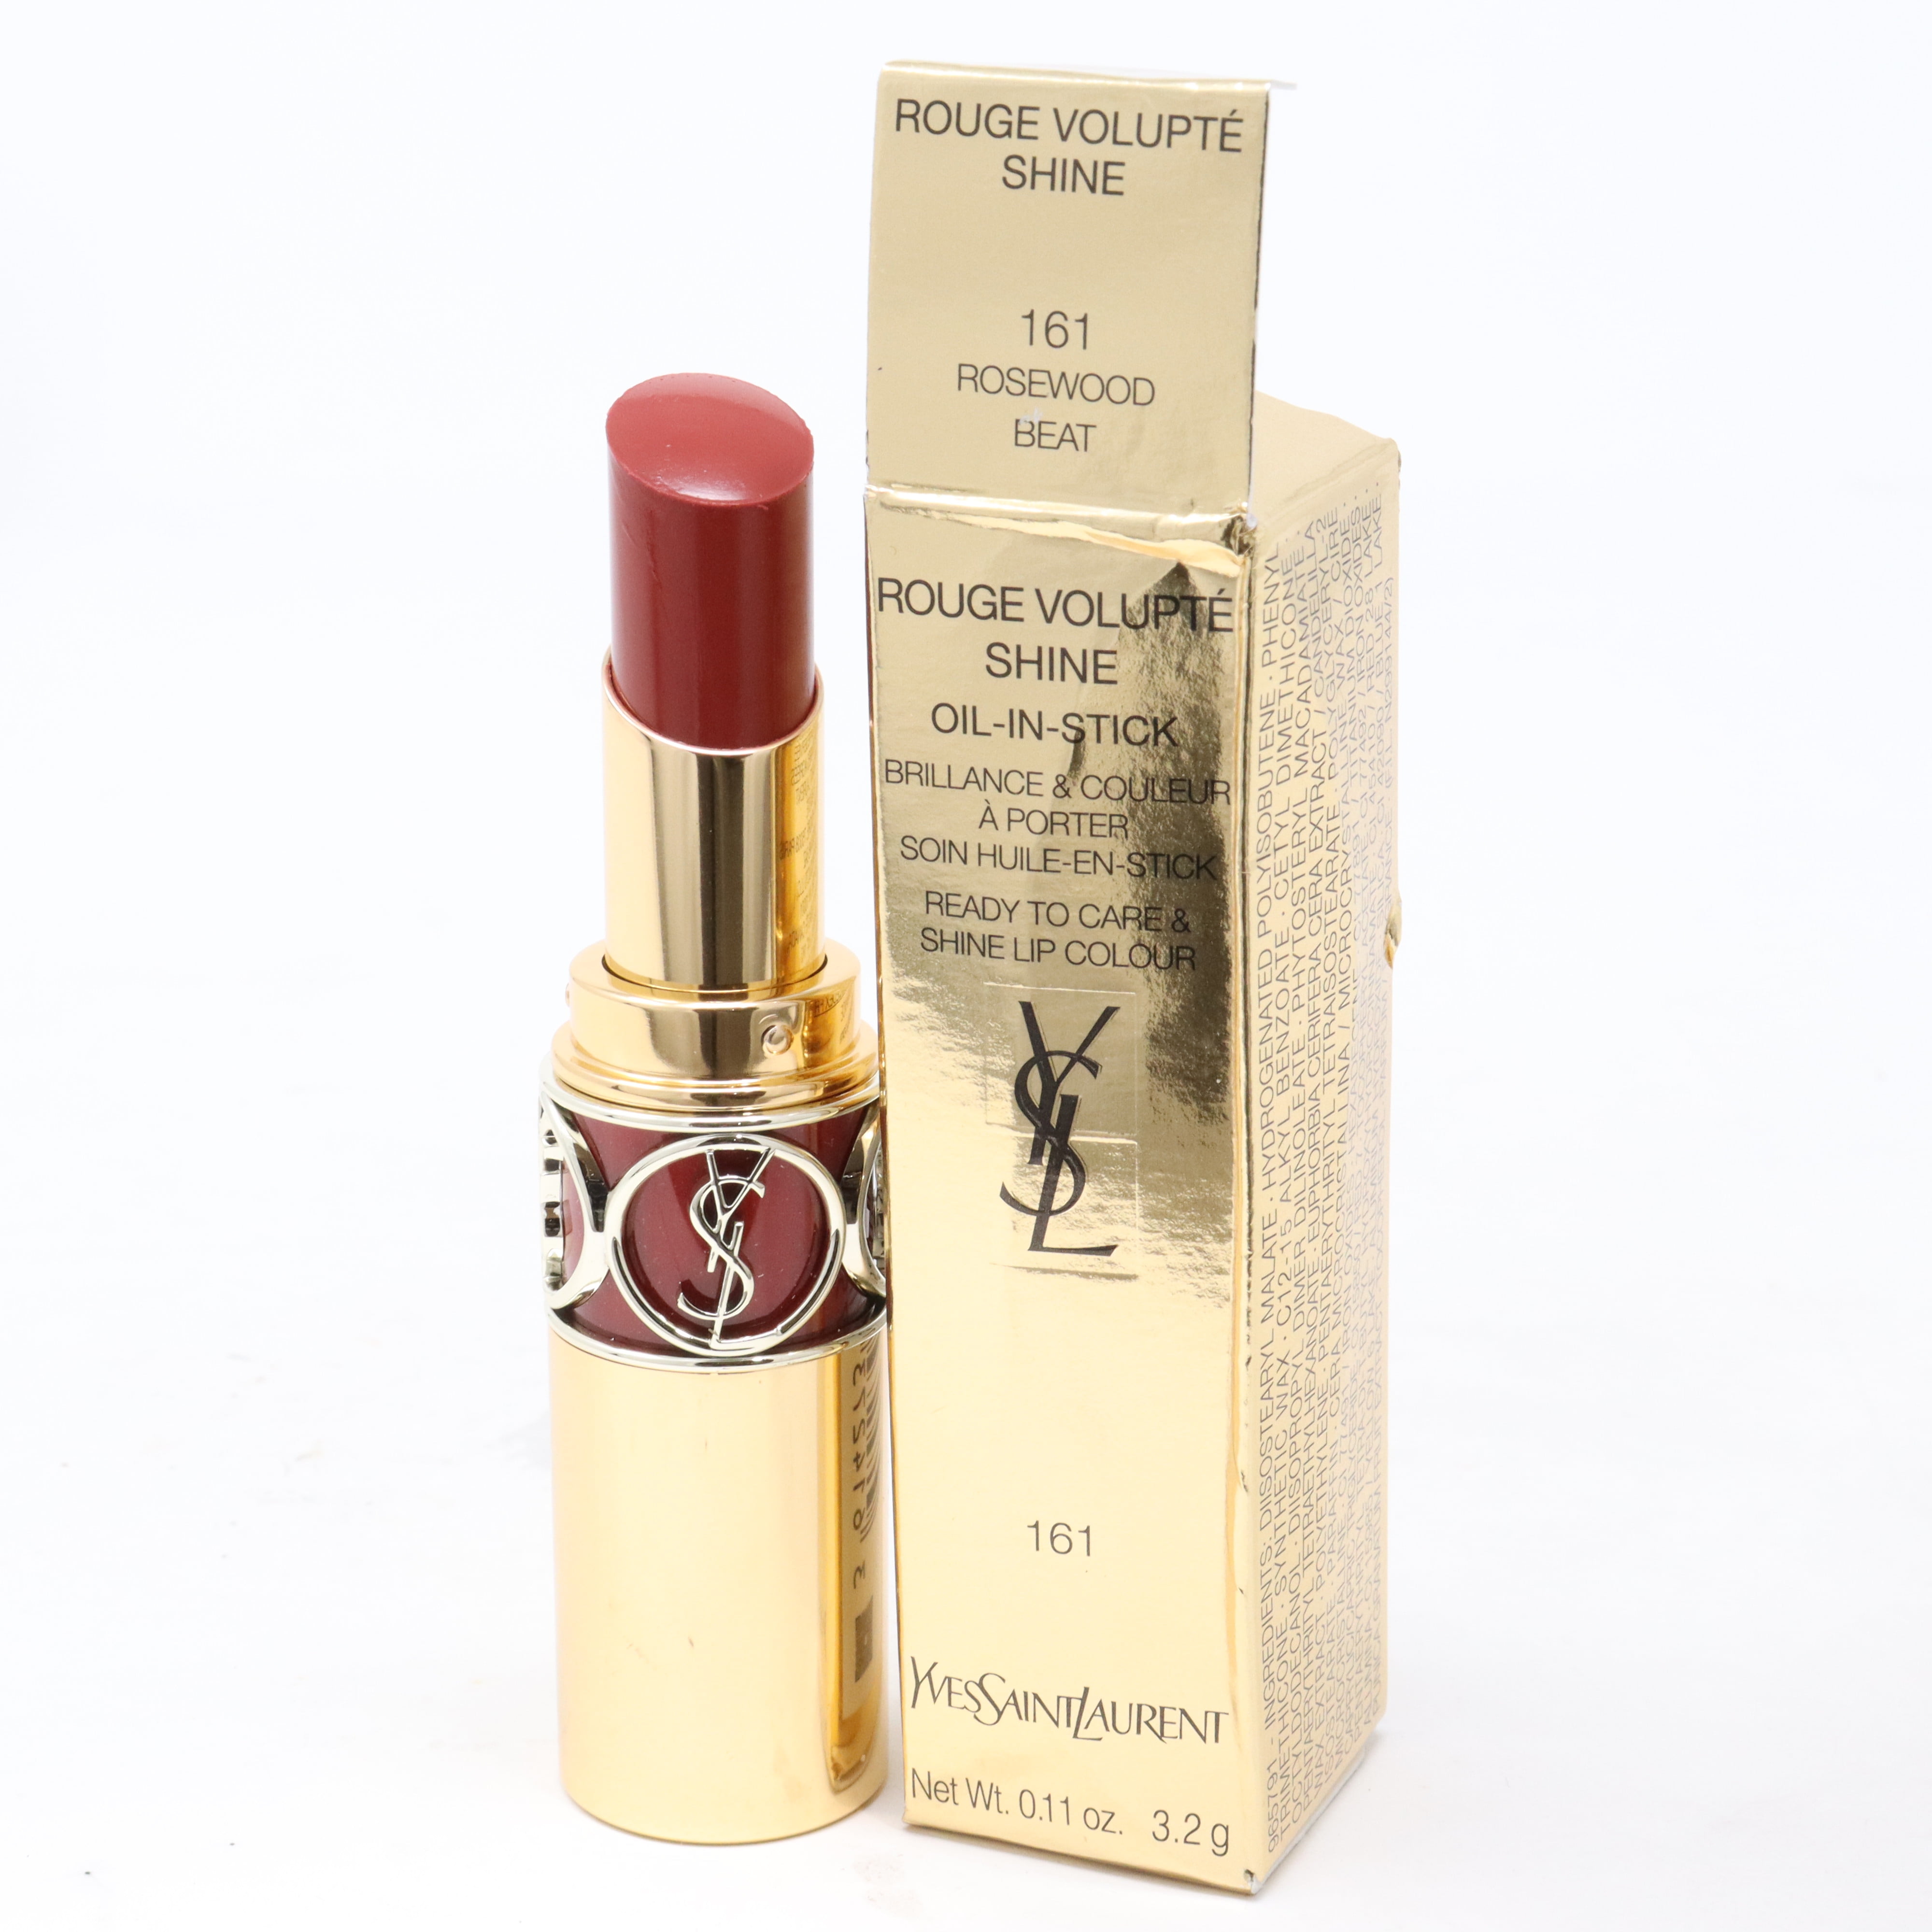 Yves Saint Laurent Rouge Volupte Shine Lipstick 0.11oz 161 Rosewood Beat New